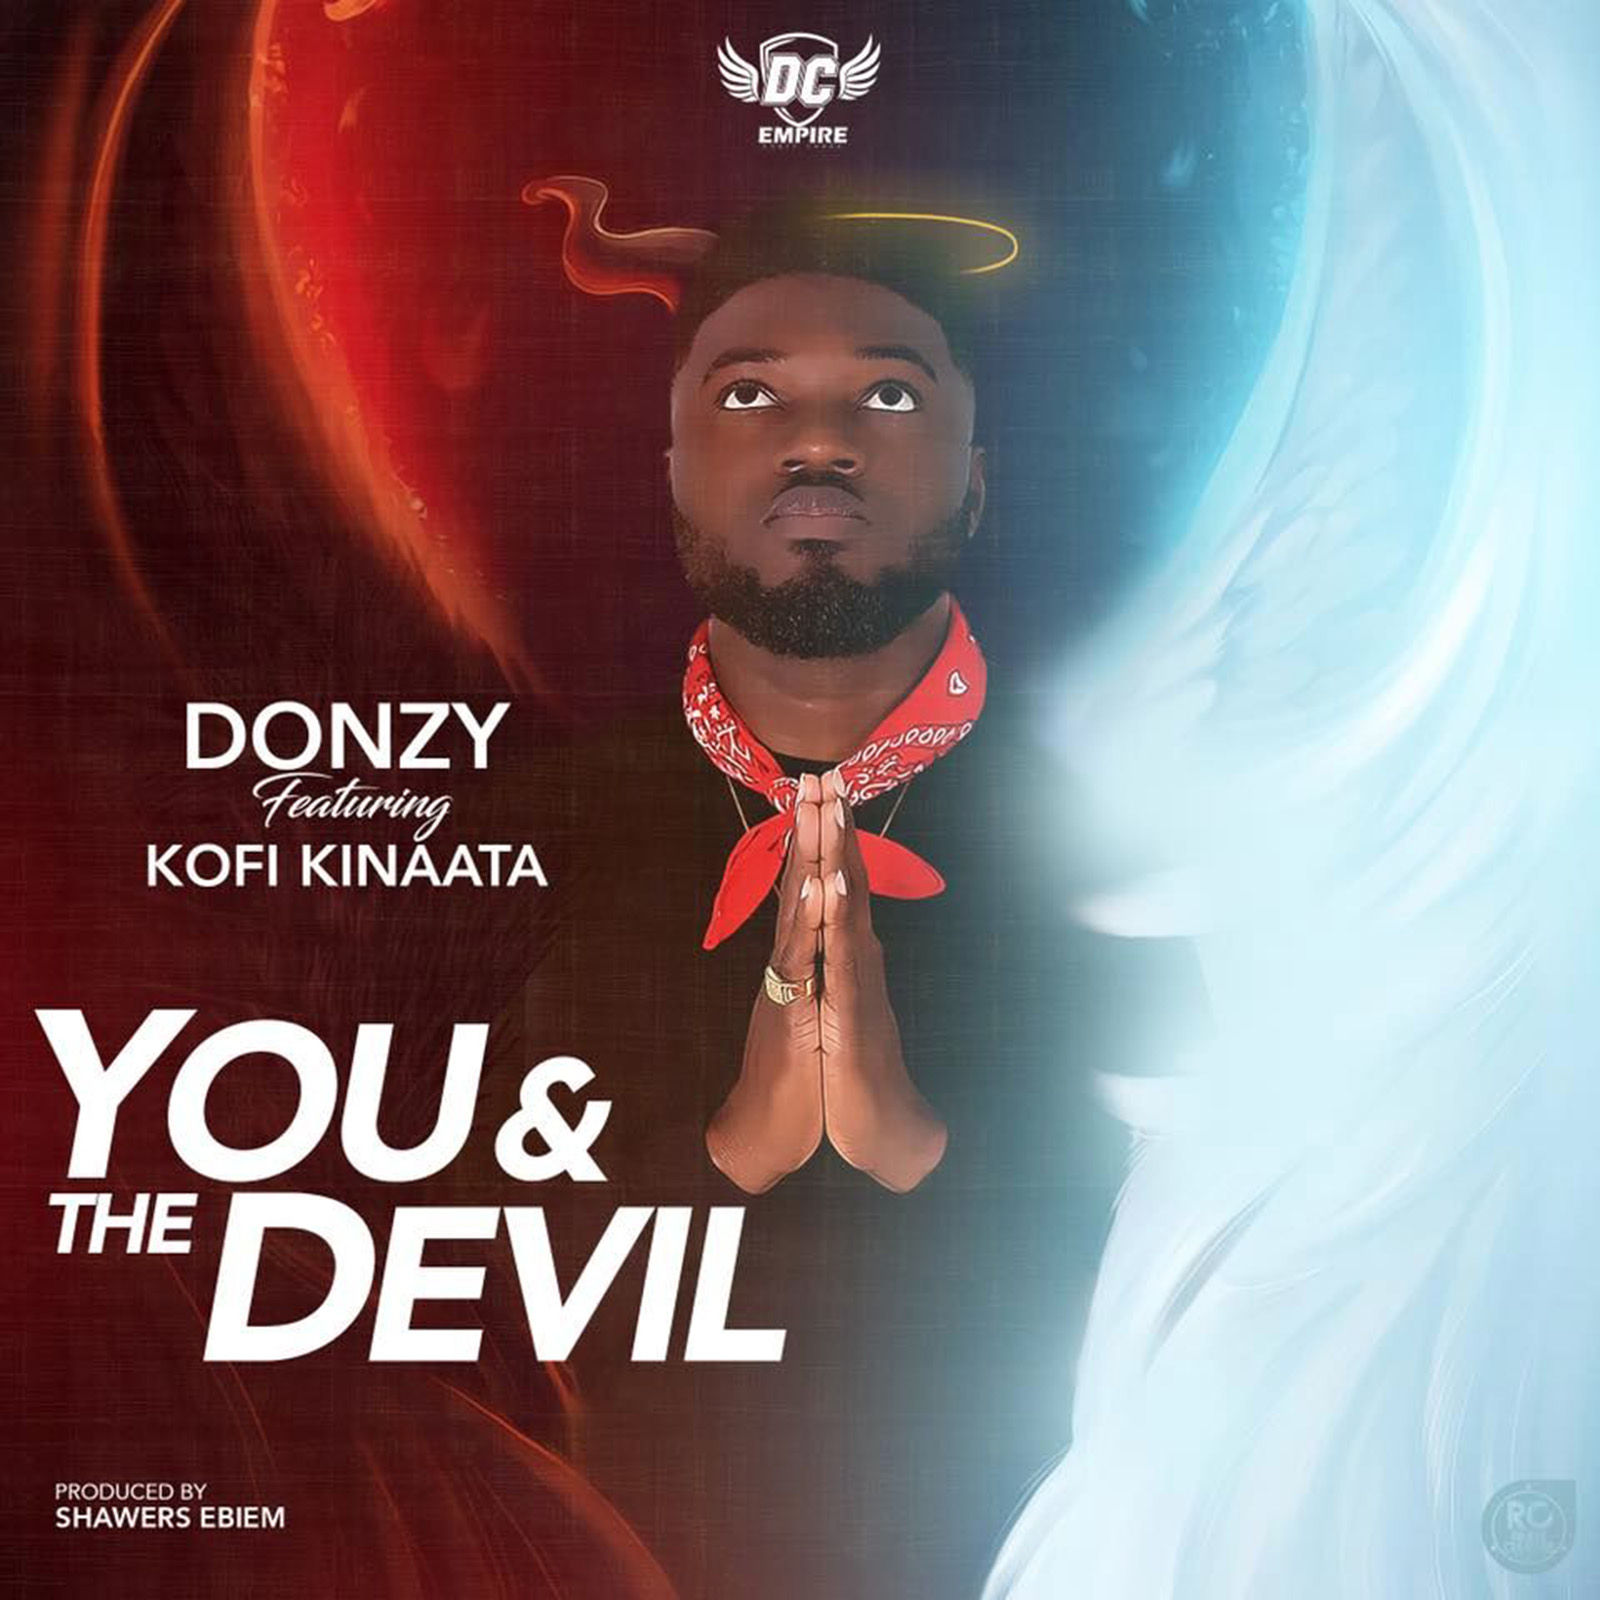 You & The Devil by Donzy feat. Kofi Kinaata